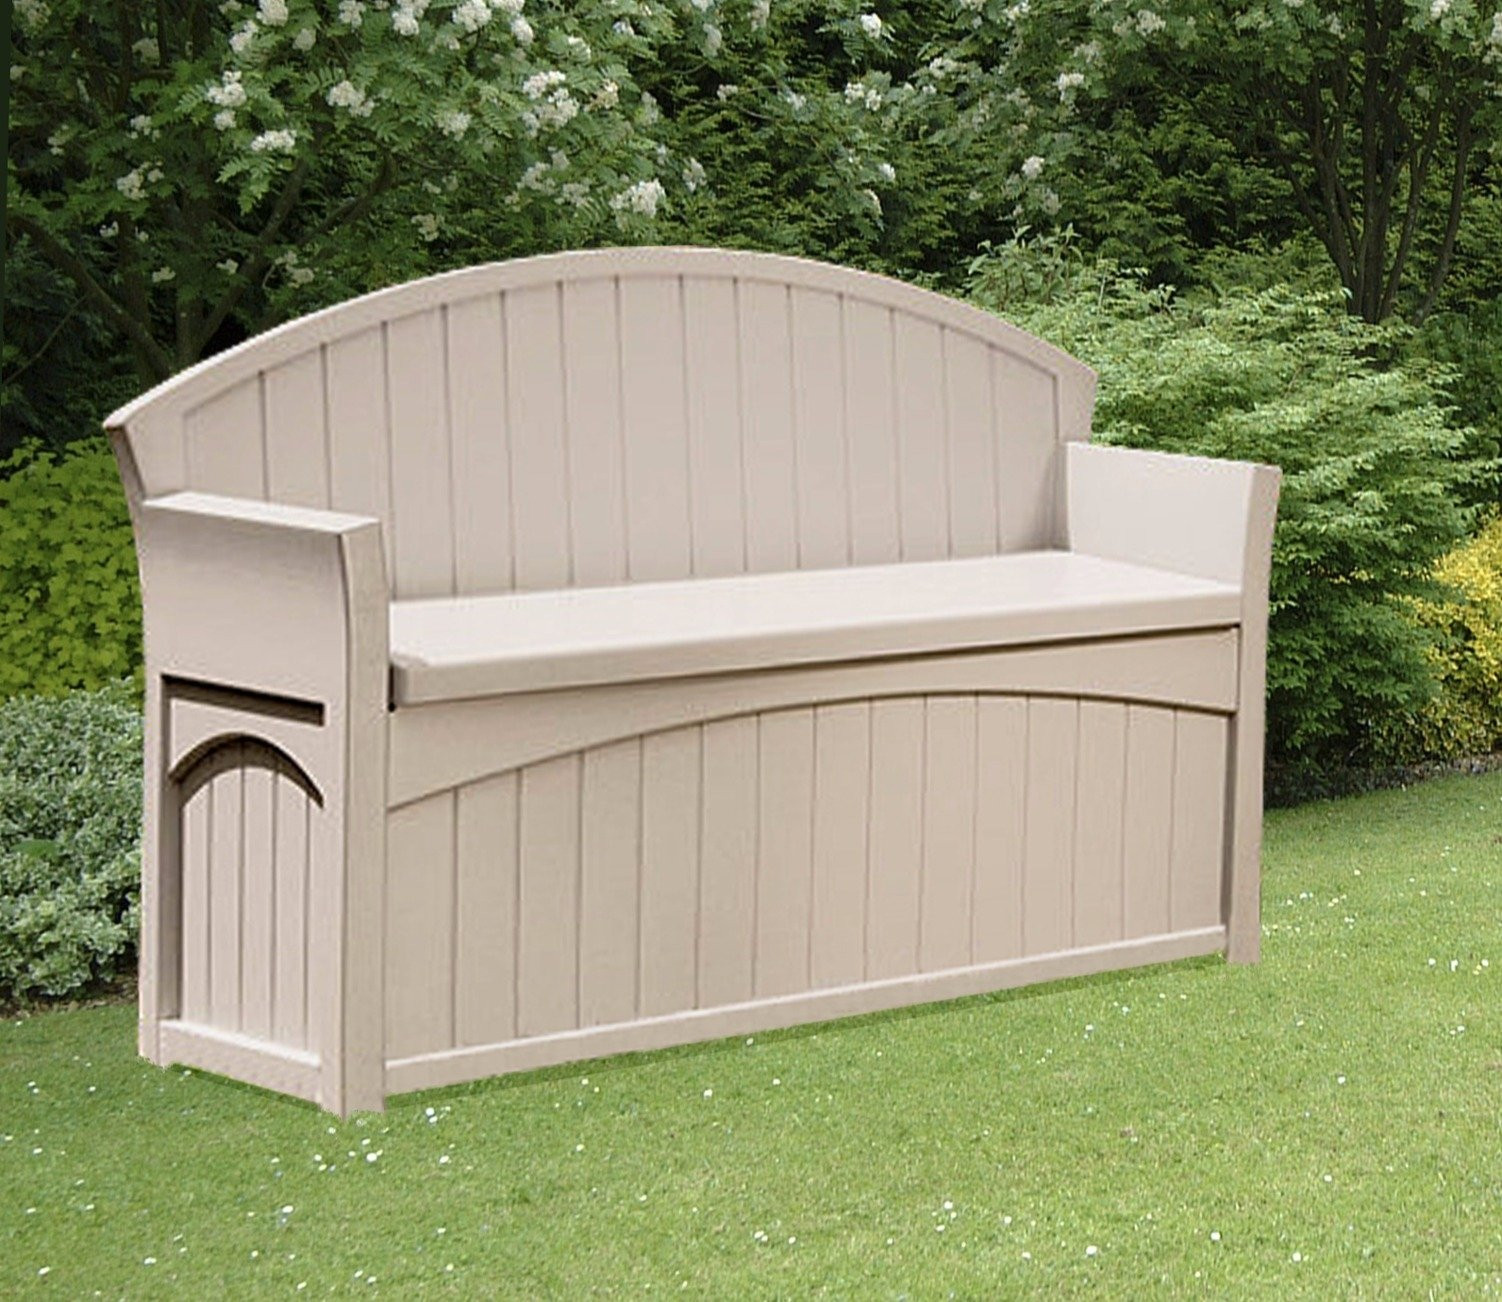 Resin Patio Storage Bench
 Suncast Patio Garden Outdoor Bench with 50 Gallon Storage